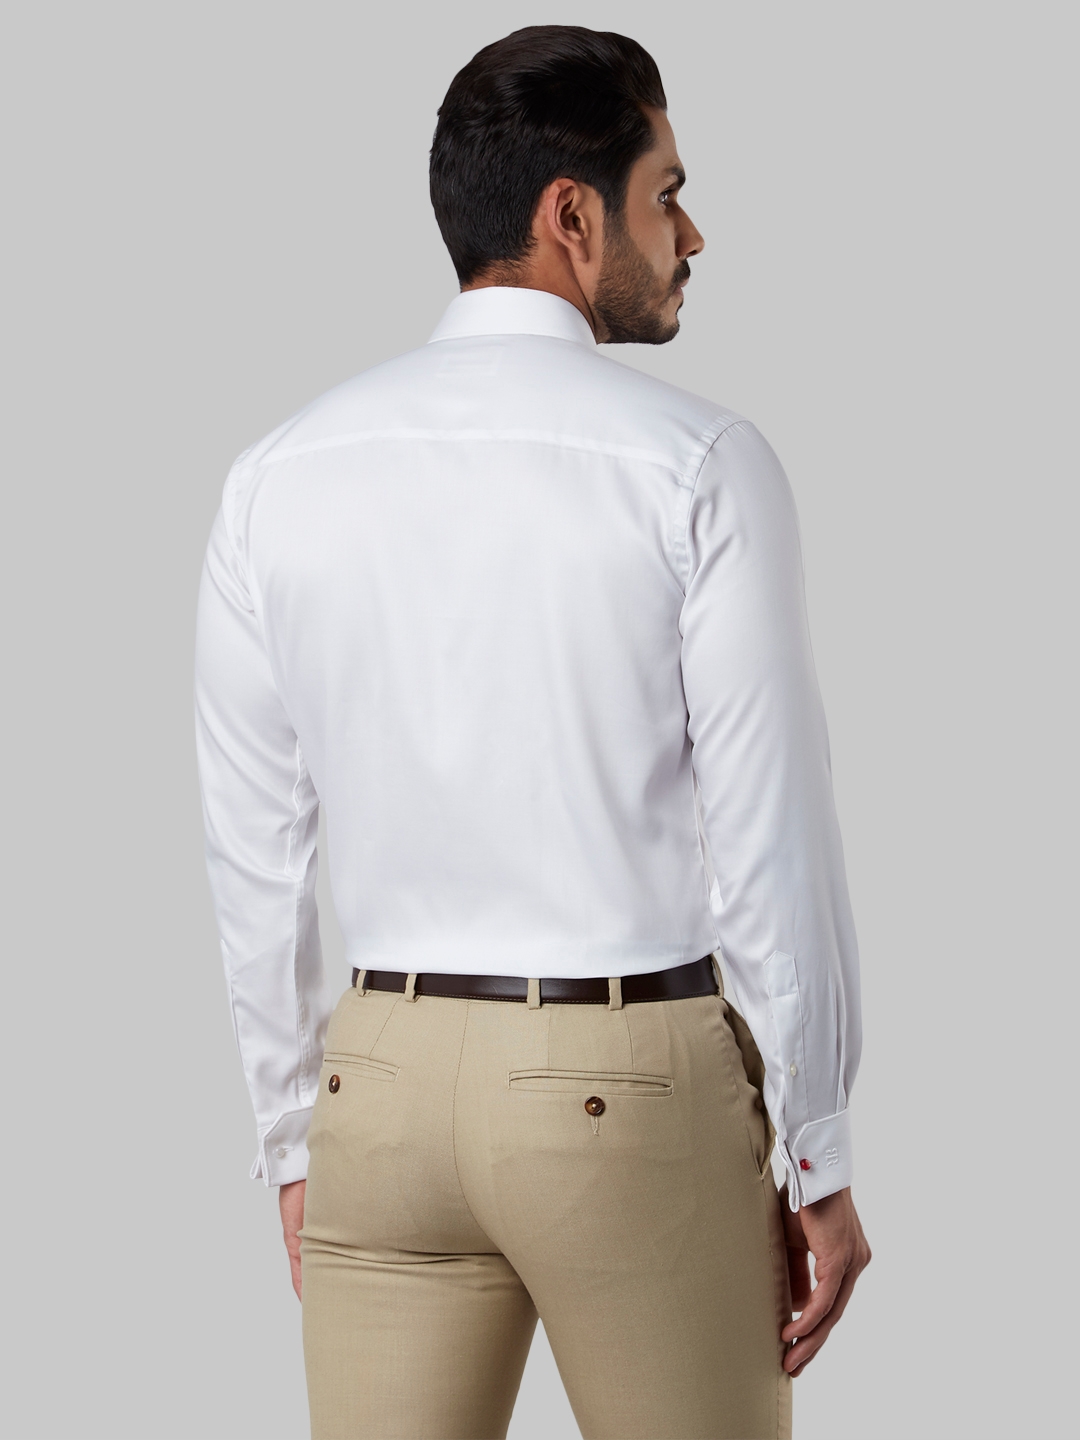 Buy Brown Shirts for Men by RAYMOND Online | Ajio.com